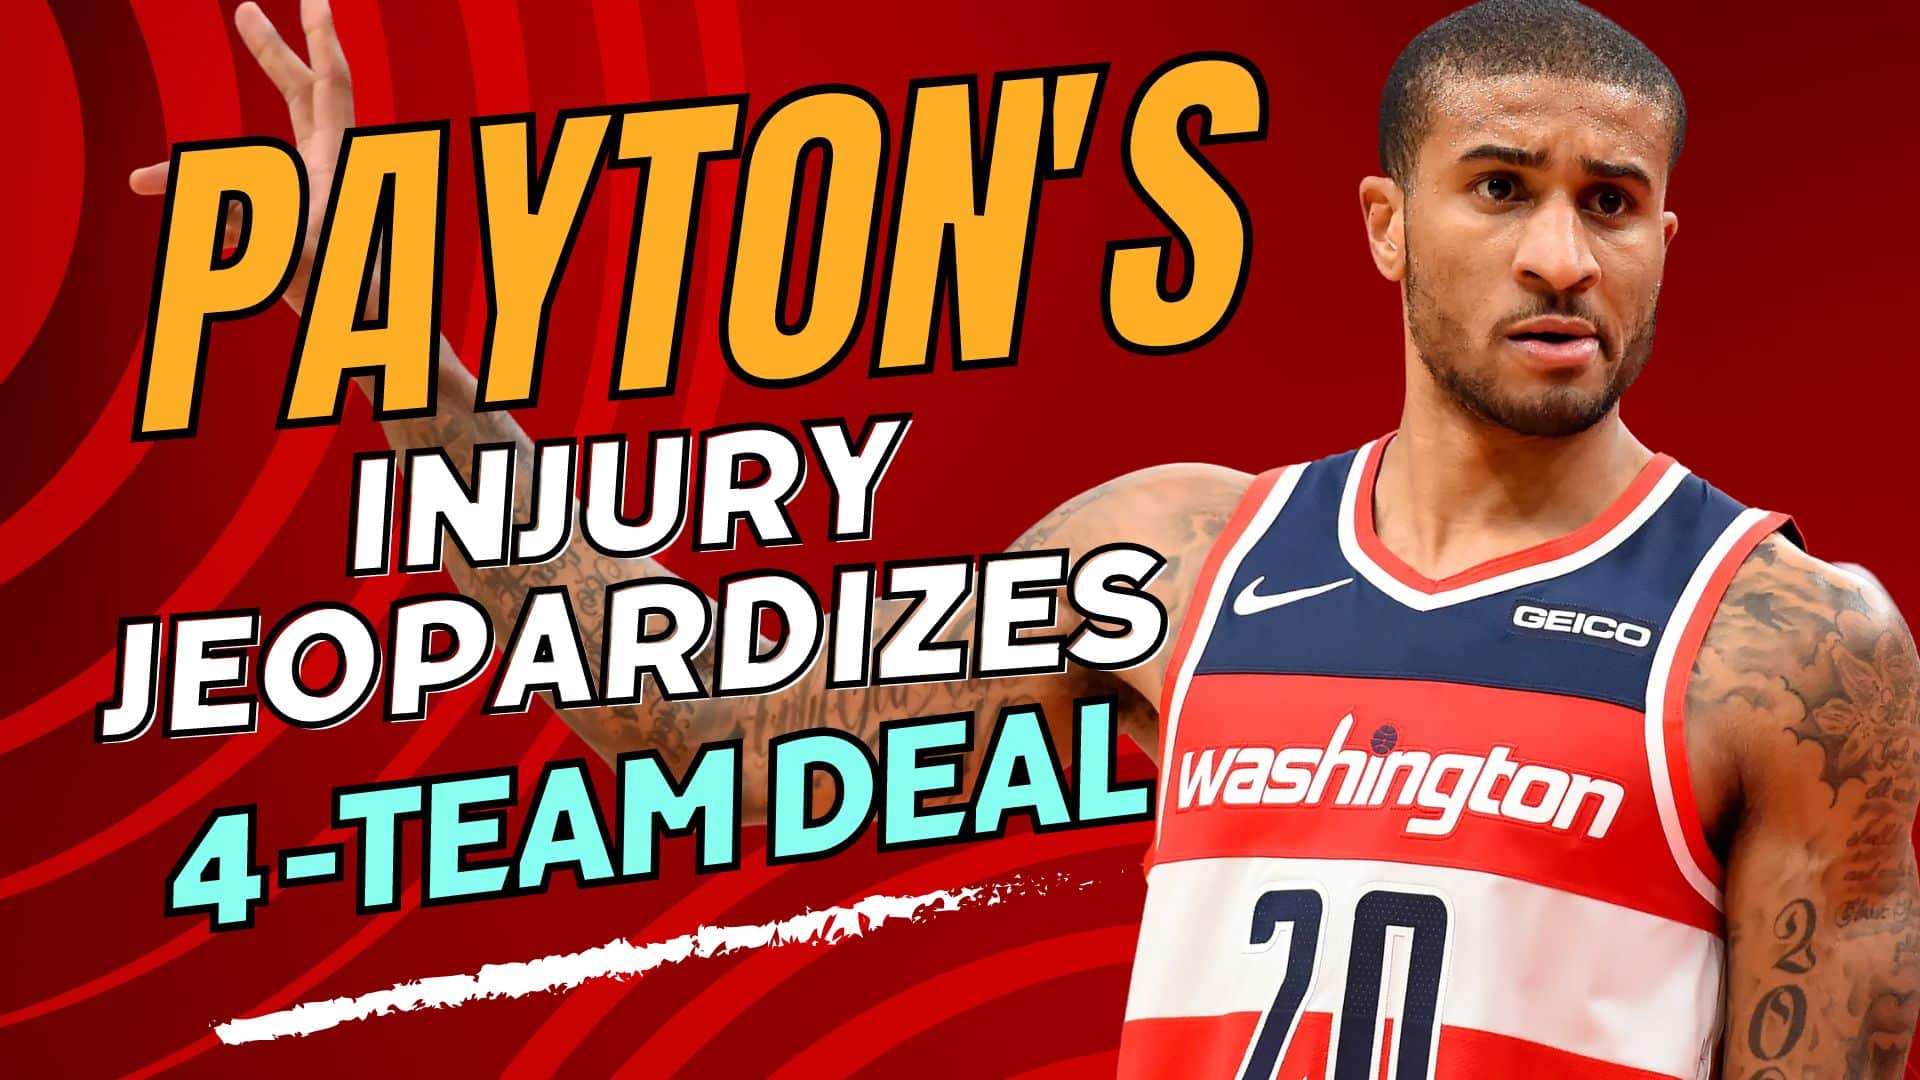 Gary Payton II's Injury Jeopardizes Major Four-Team Deal!